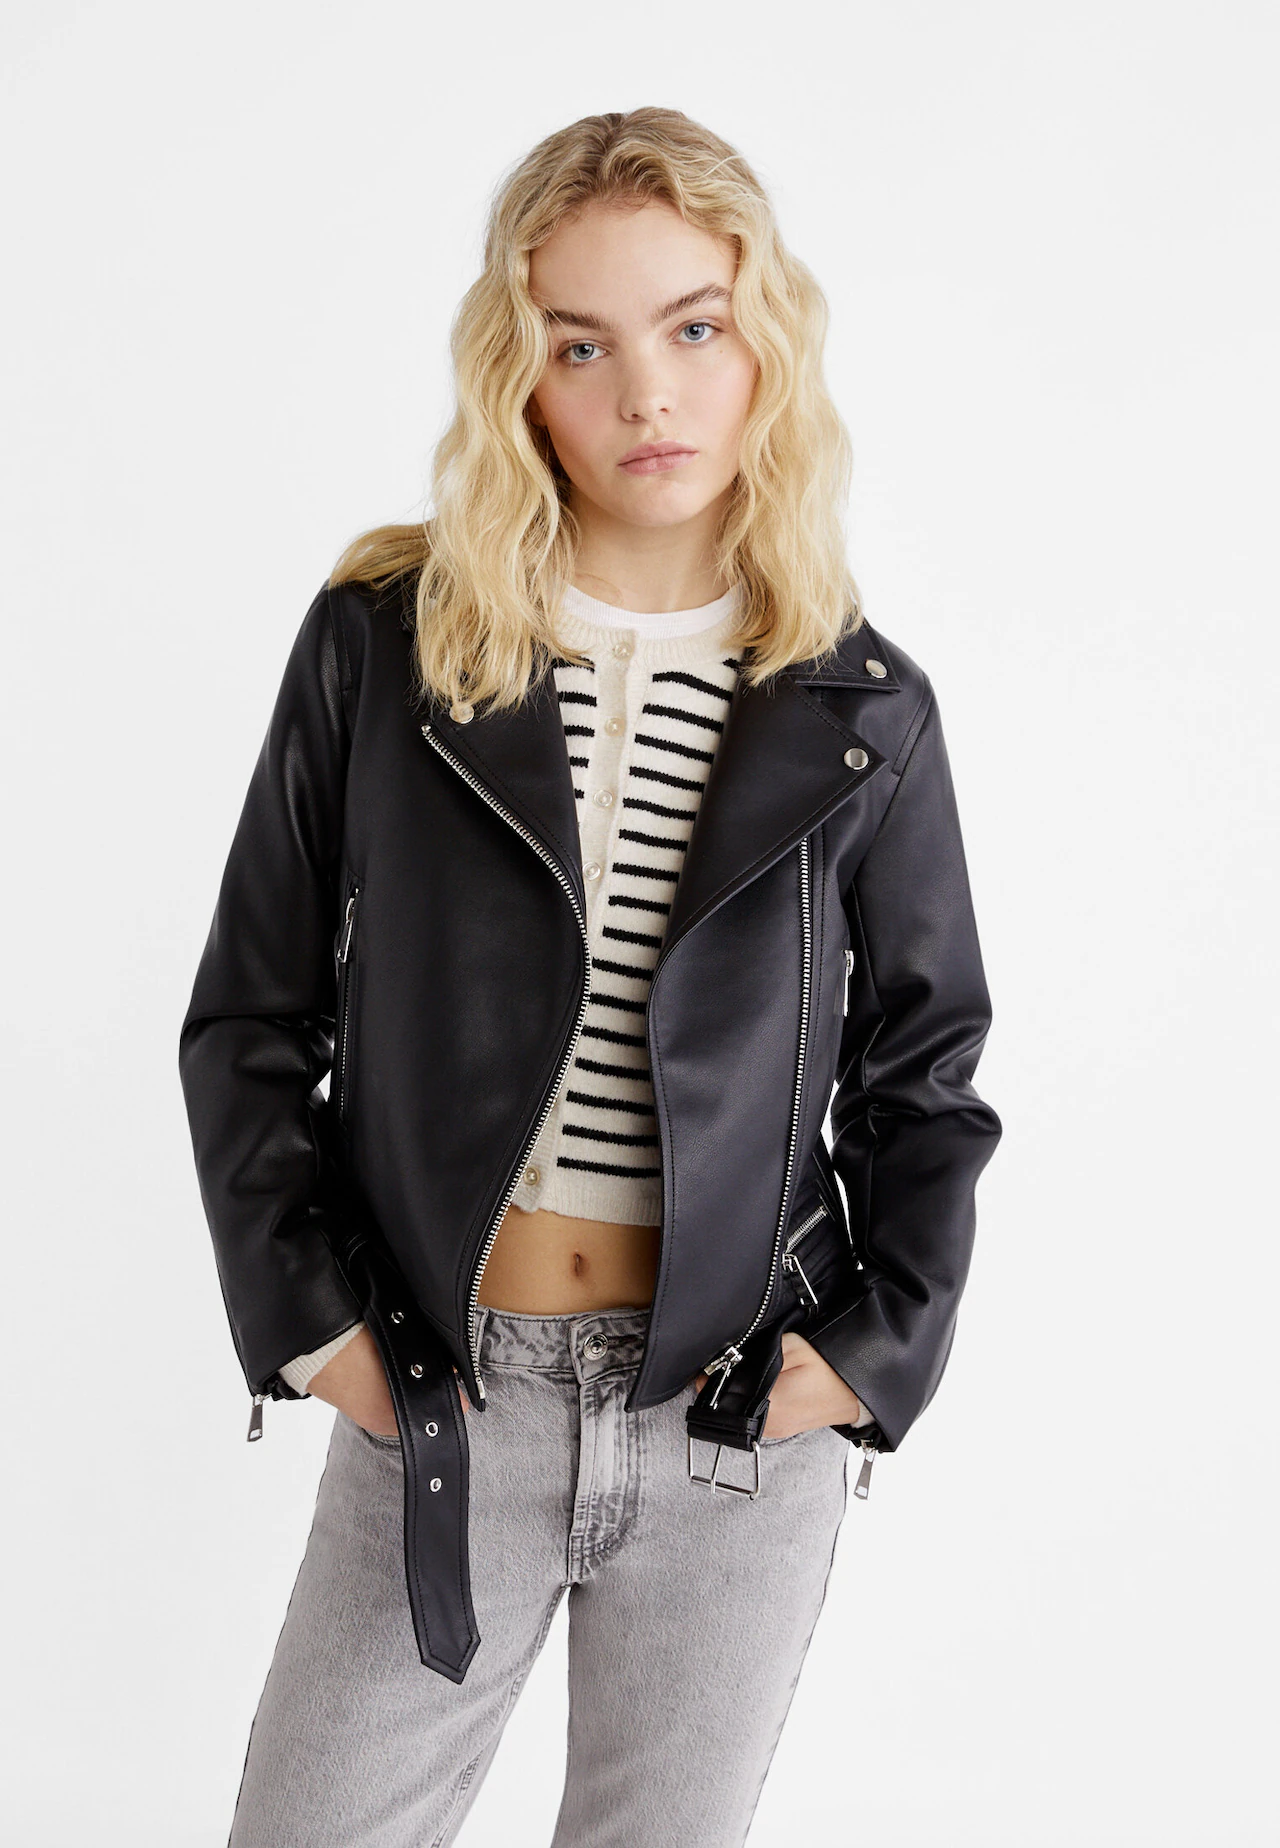 Faux leather biker jacket - Women's fashion